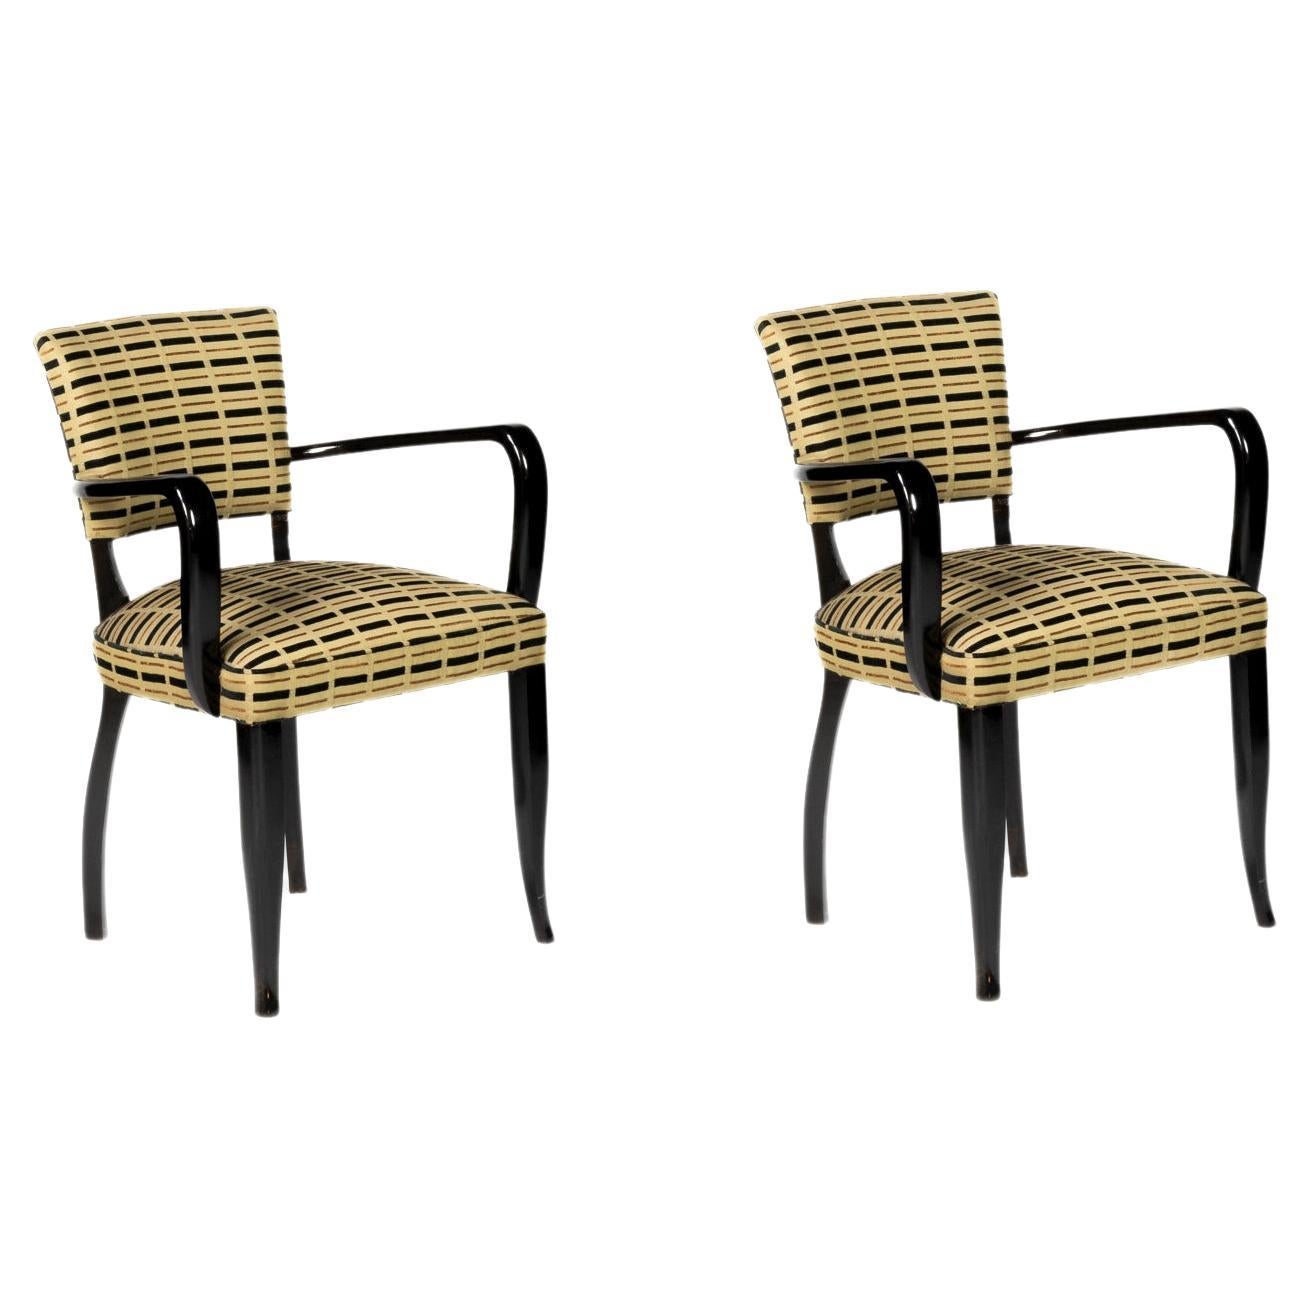 Set of 2 French Bridge Chairs, 20th Century